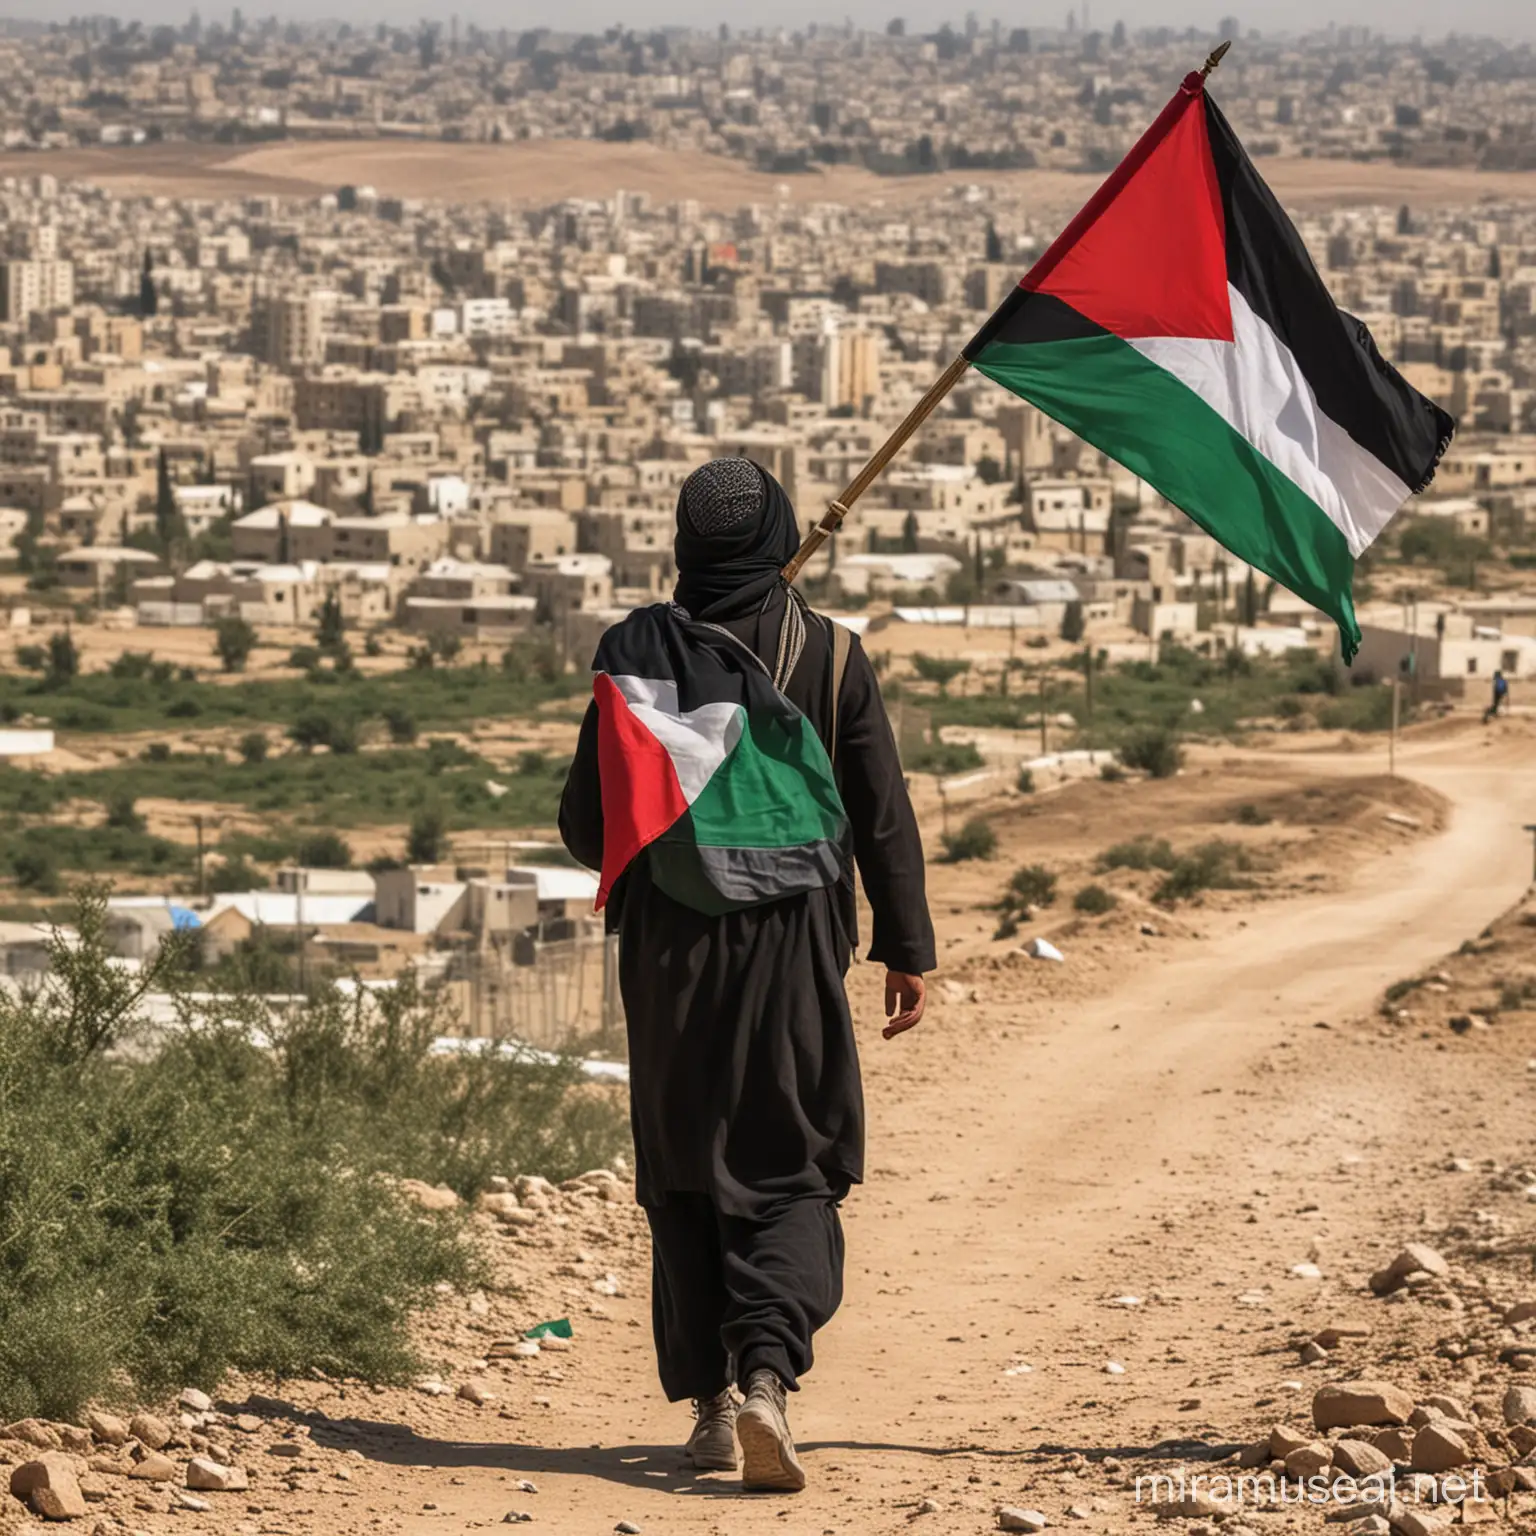 Palestinian Refugee with Flag in Desert Landscape